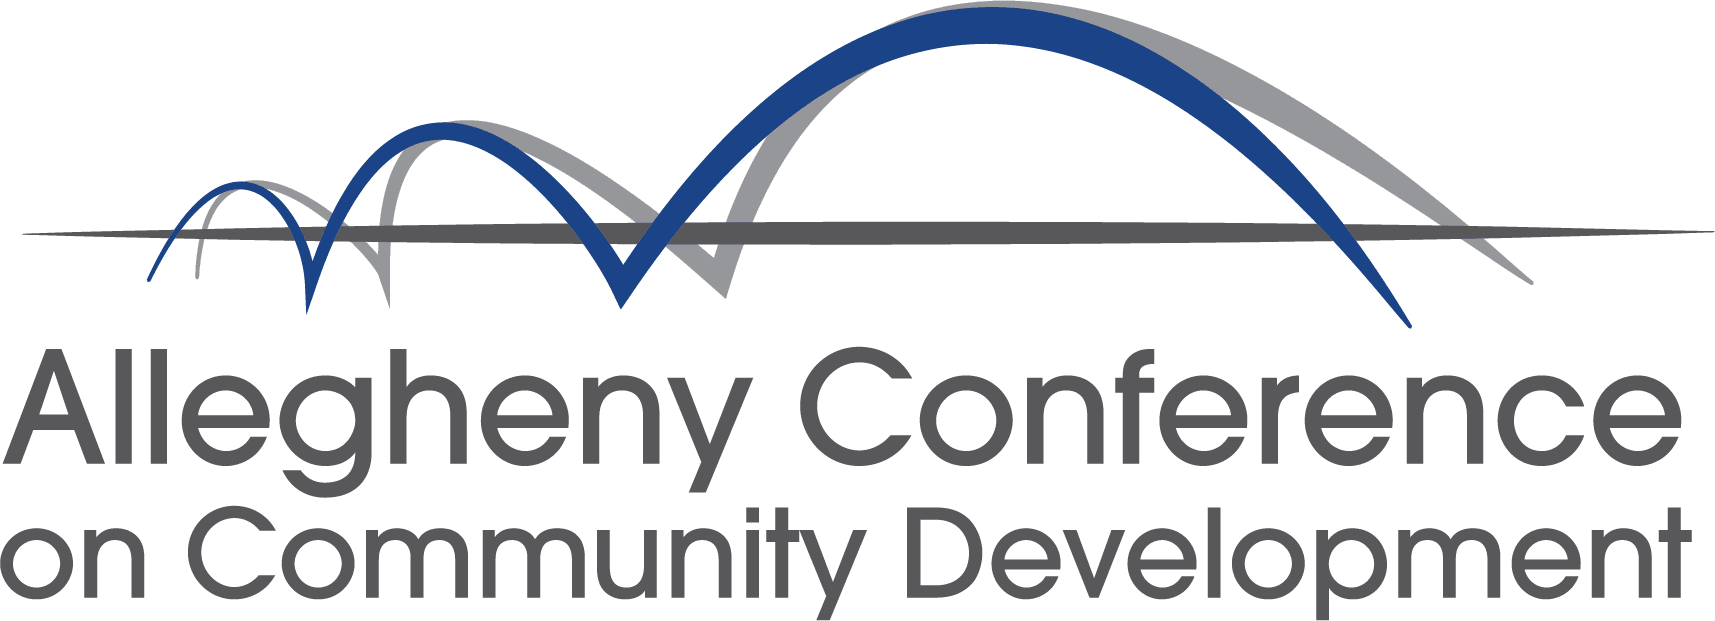 Allegheny Conference on Community Development logo